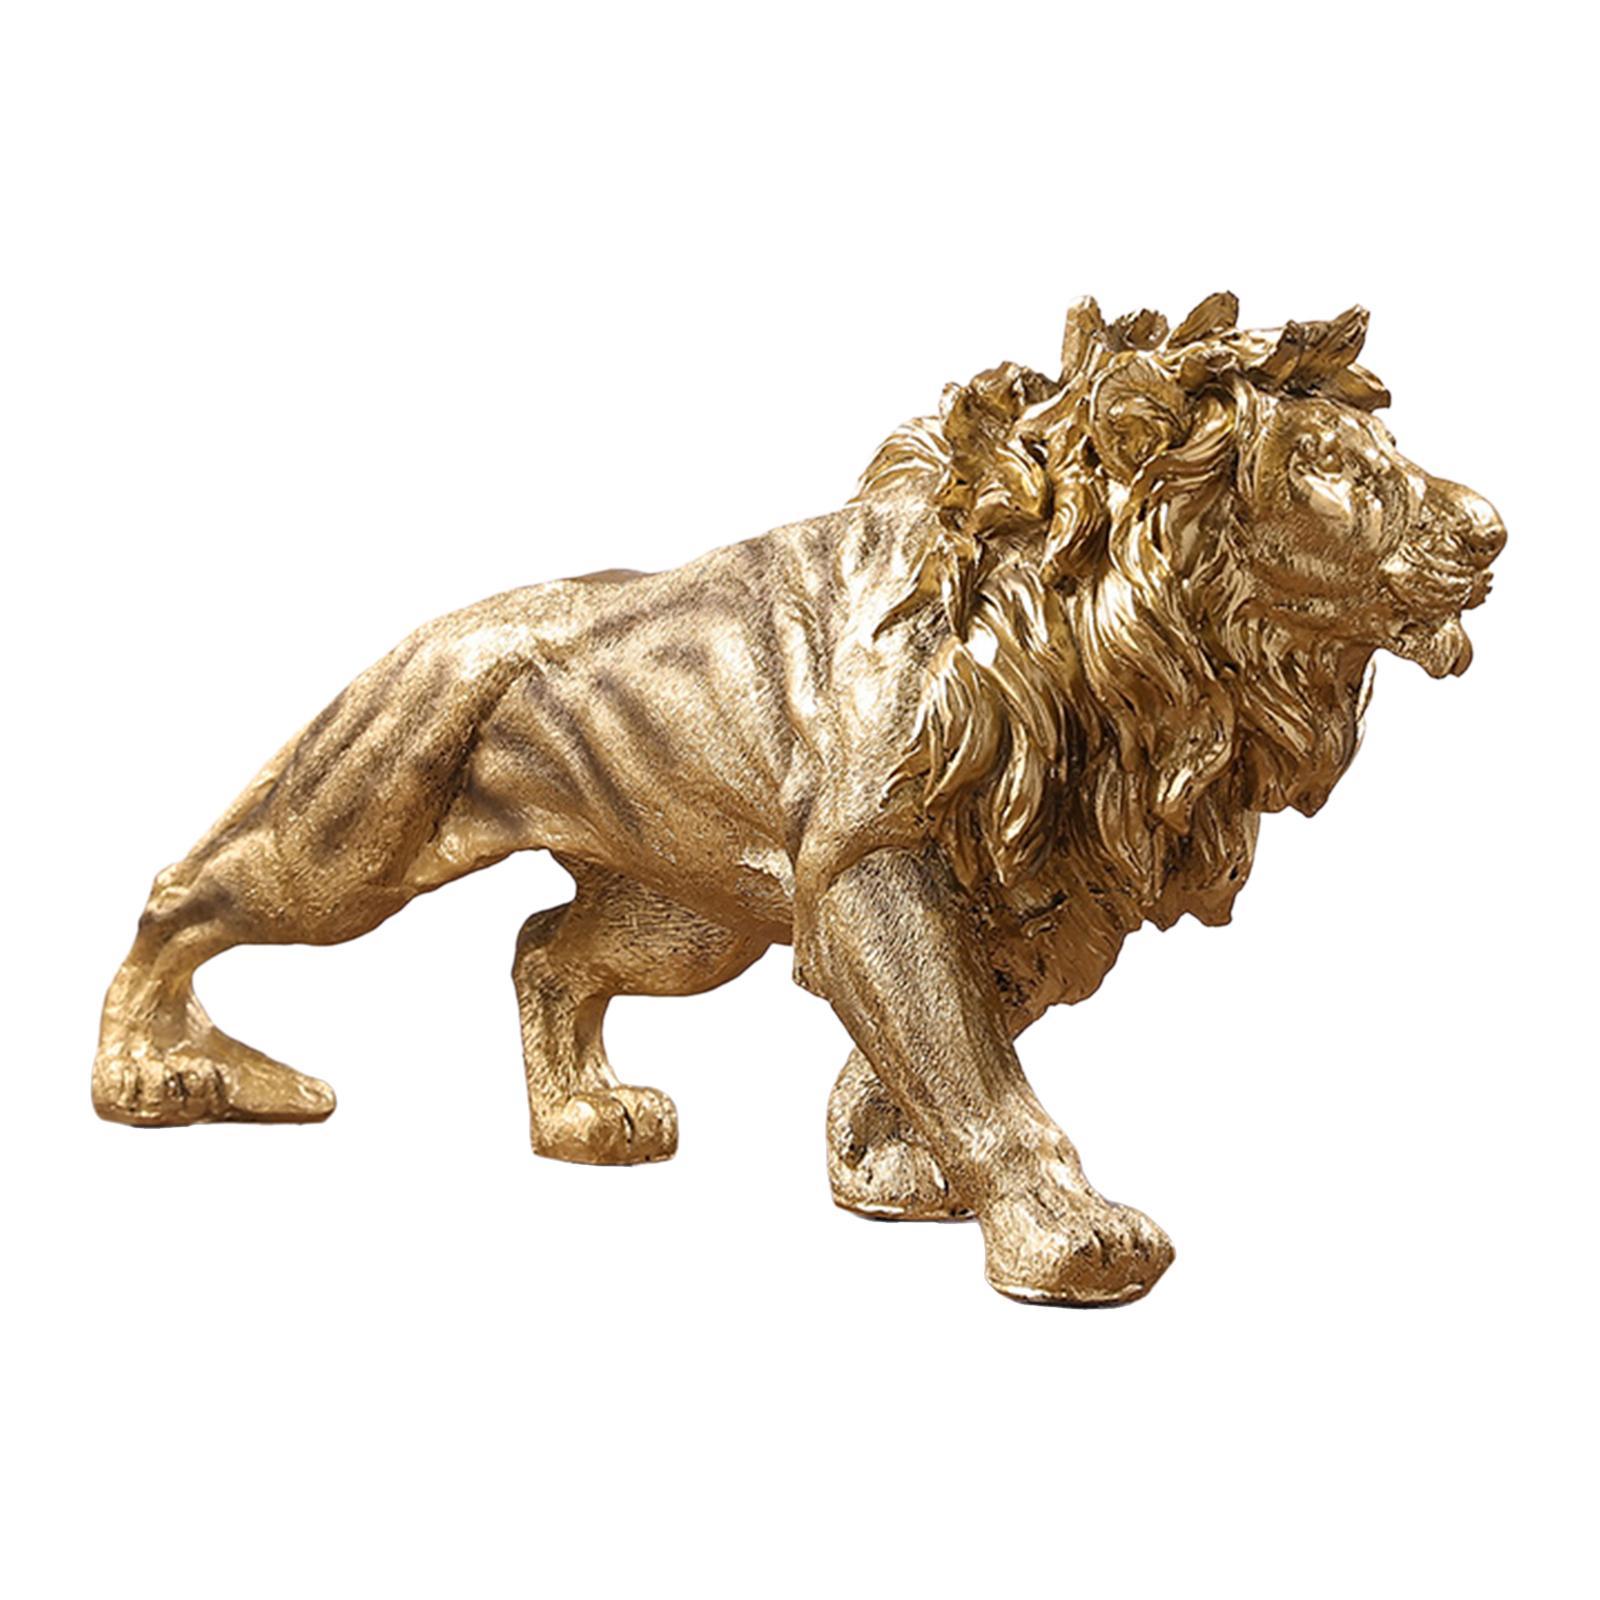 Lion King Statue Lion Figurine Collectible for Entrance Housewarming Cabinet